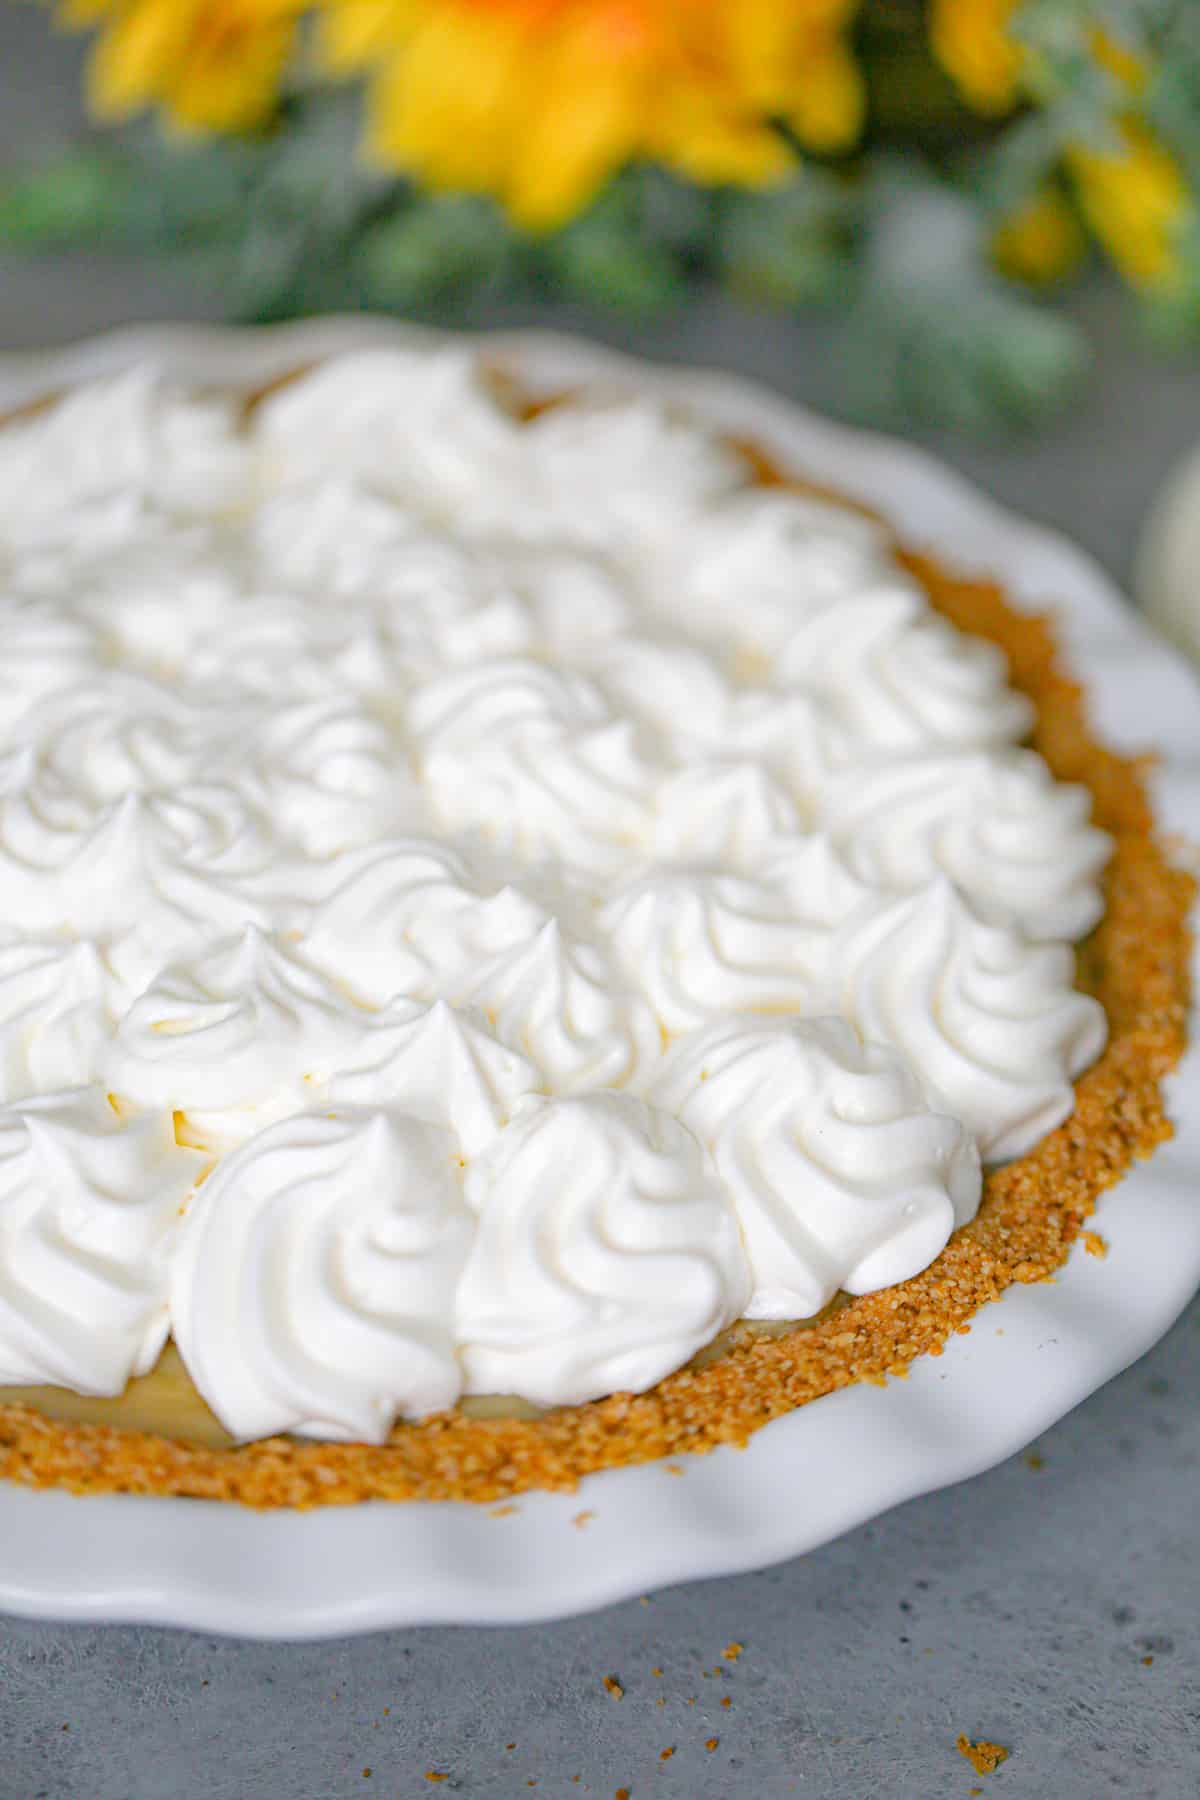 easy Marvelous Butterscotch pudding Pie recipe